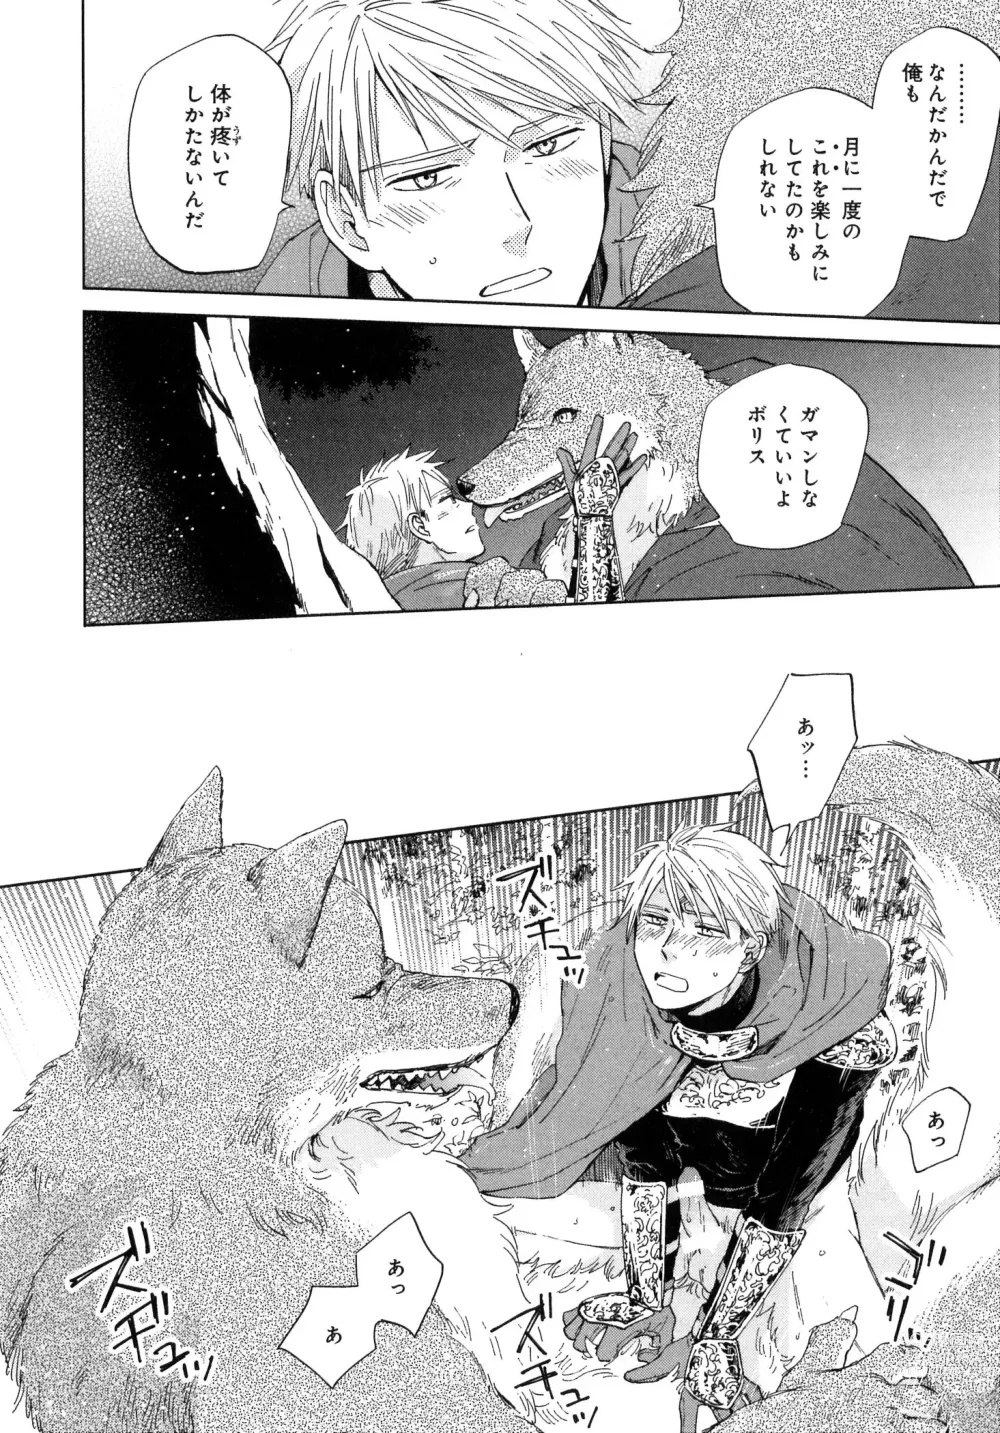 Page 156 of manga Outside Pornograph